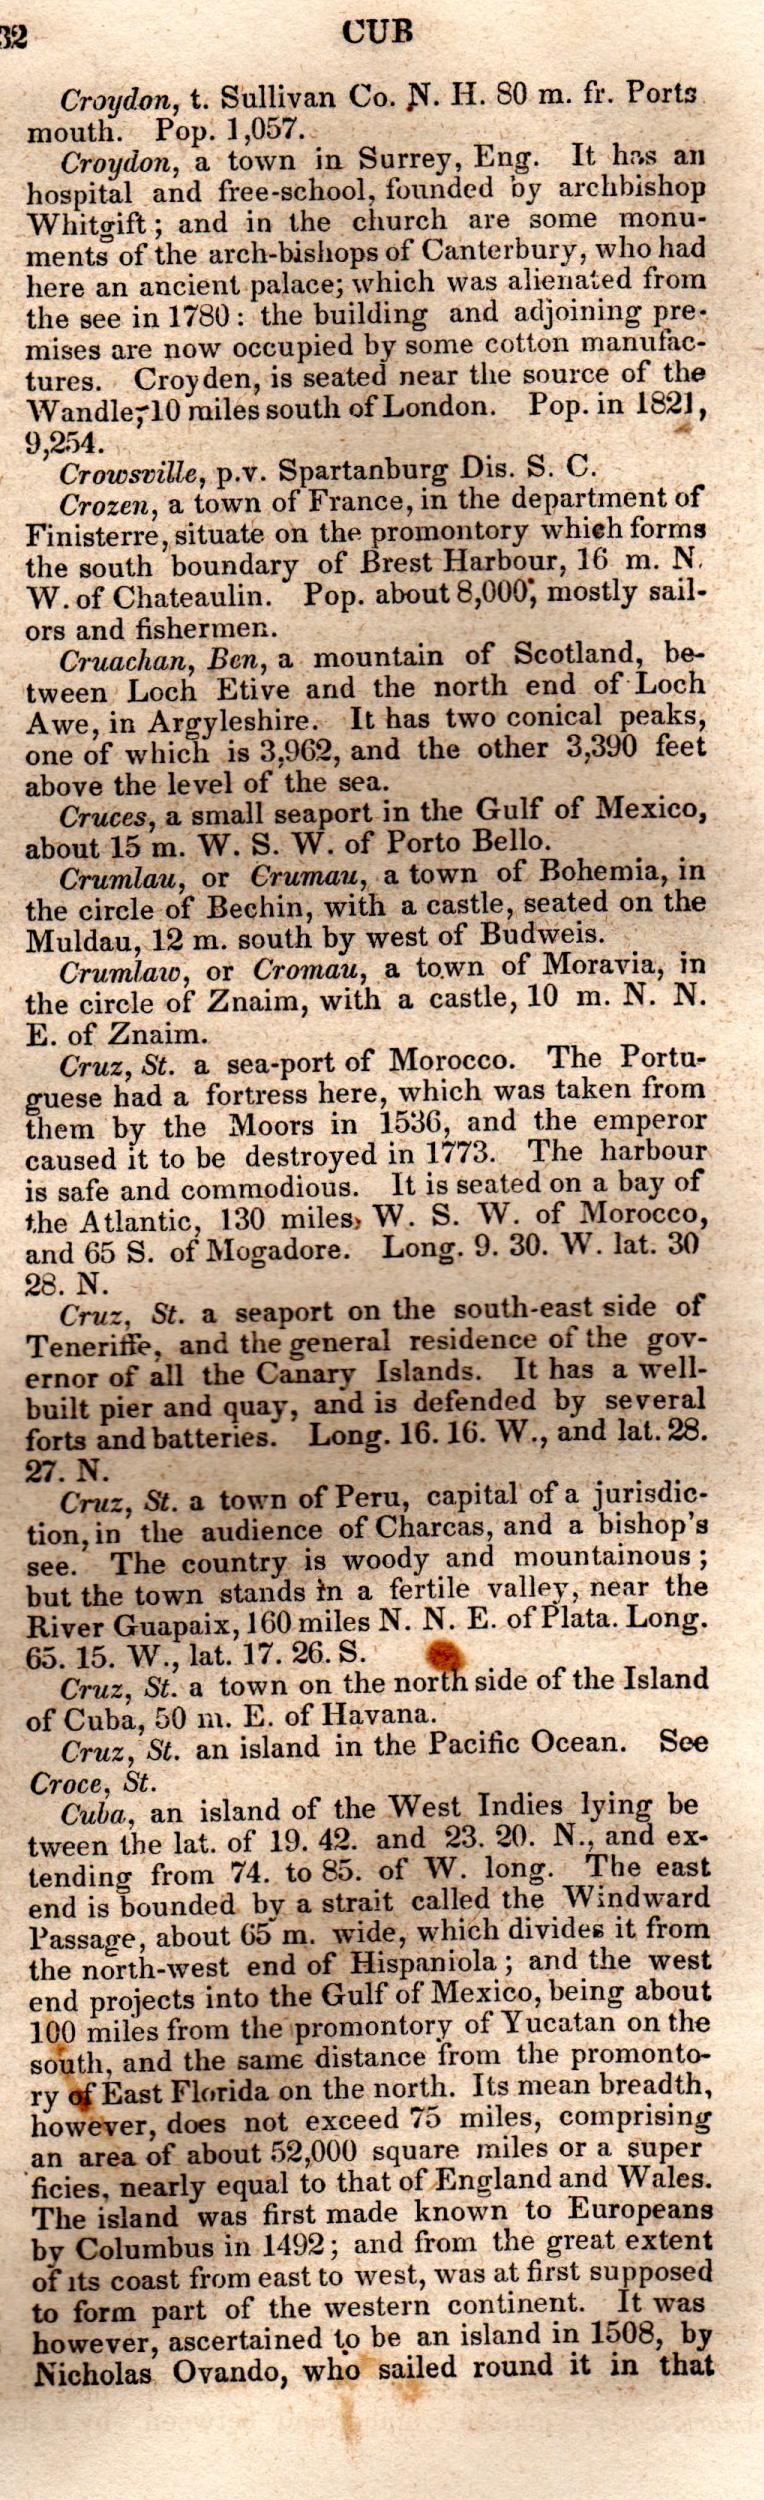 Brookes’ Universal Gazetteer (1850), Page 232 Right Column